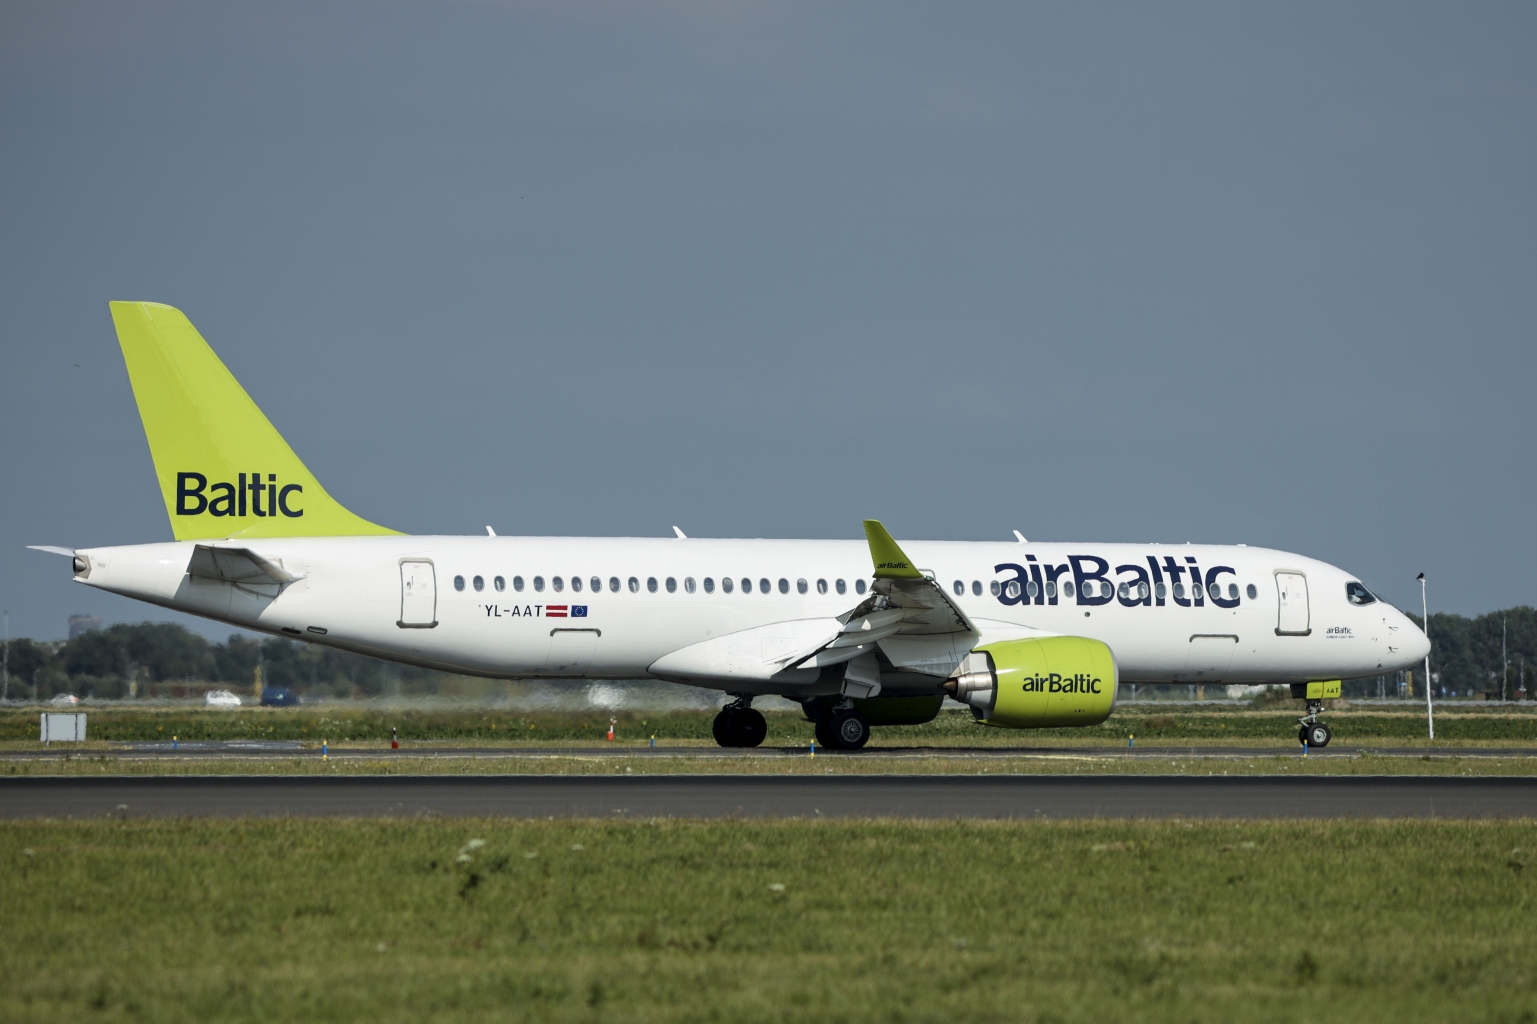 Preview Air Baltic Airbus YL-AAT A220-300 (5).jpg